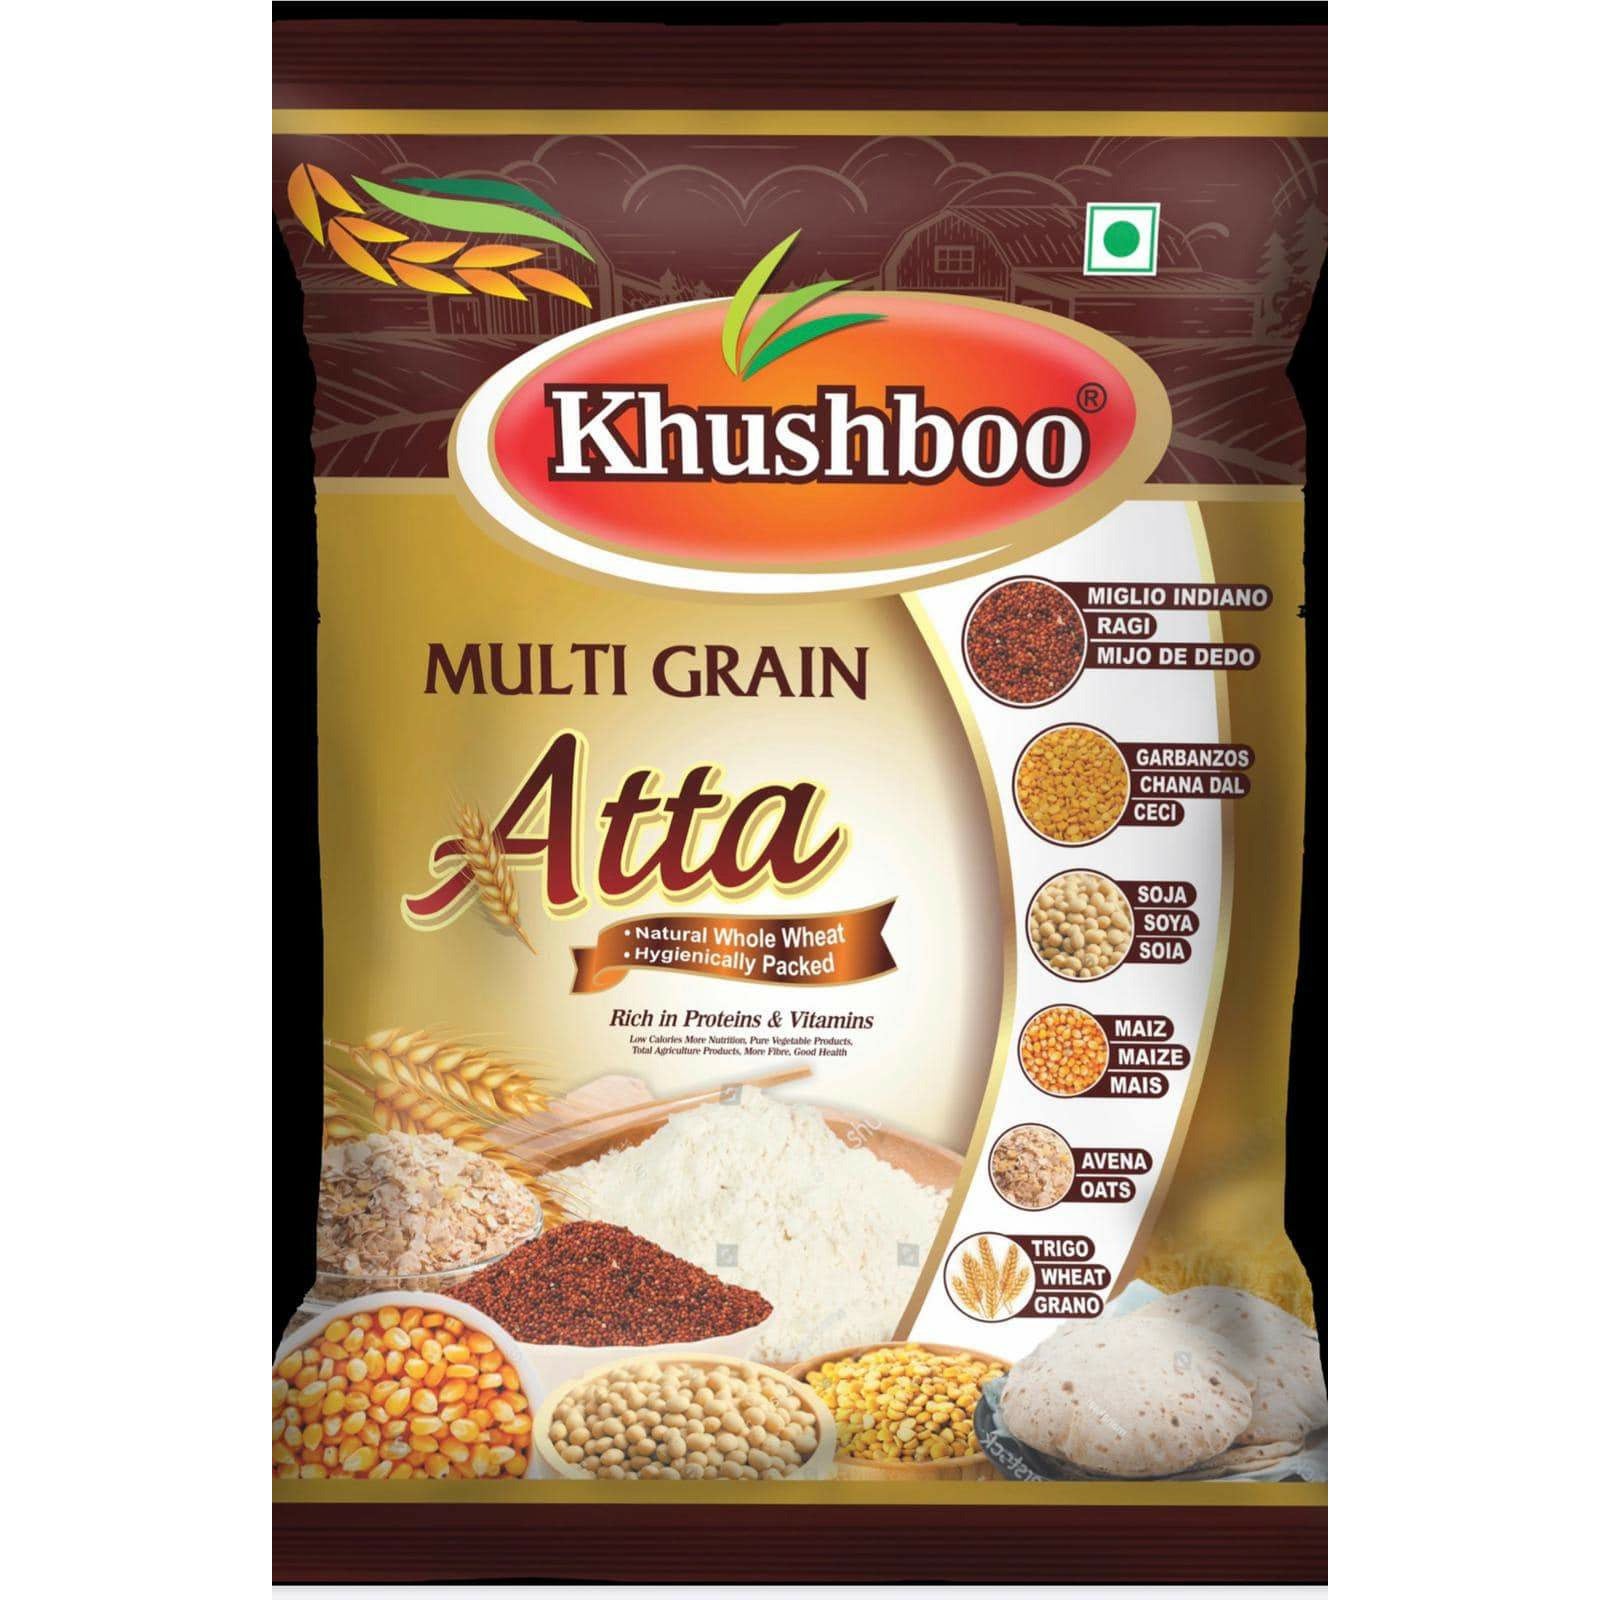 Khusbhoo Atta Multi Grain